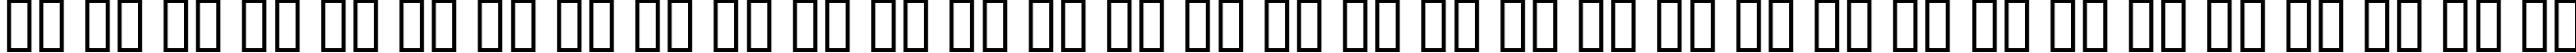 Пример написания русского алфавита шрифтом Newlywed